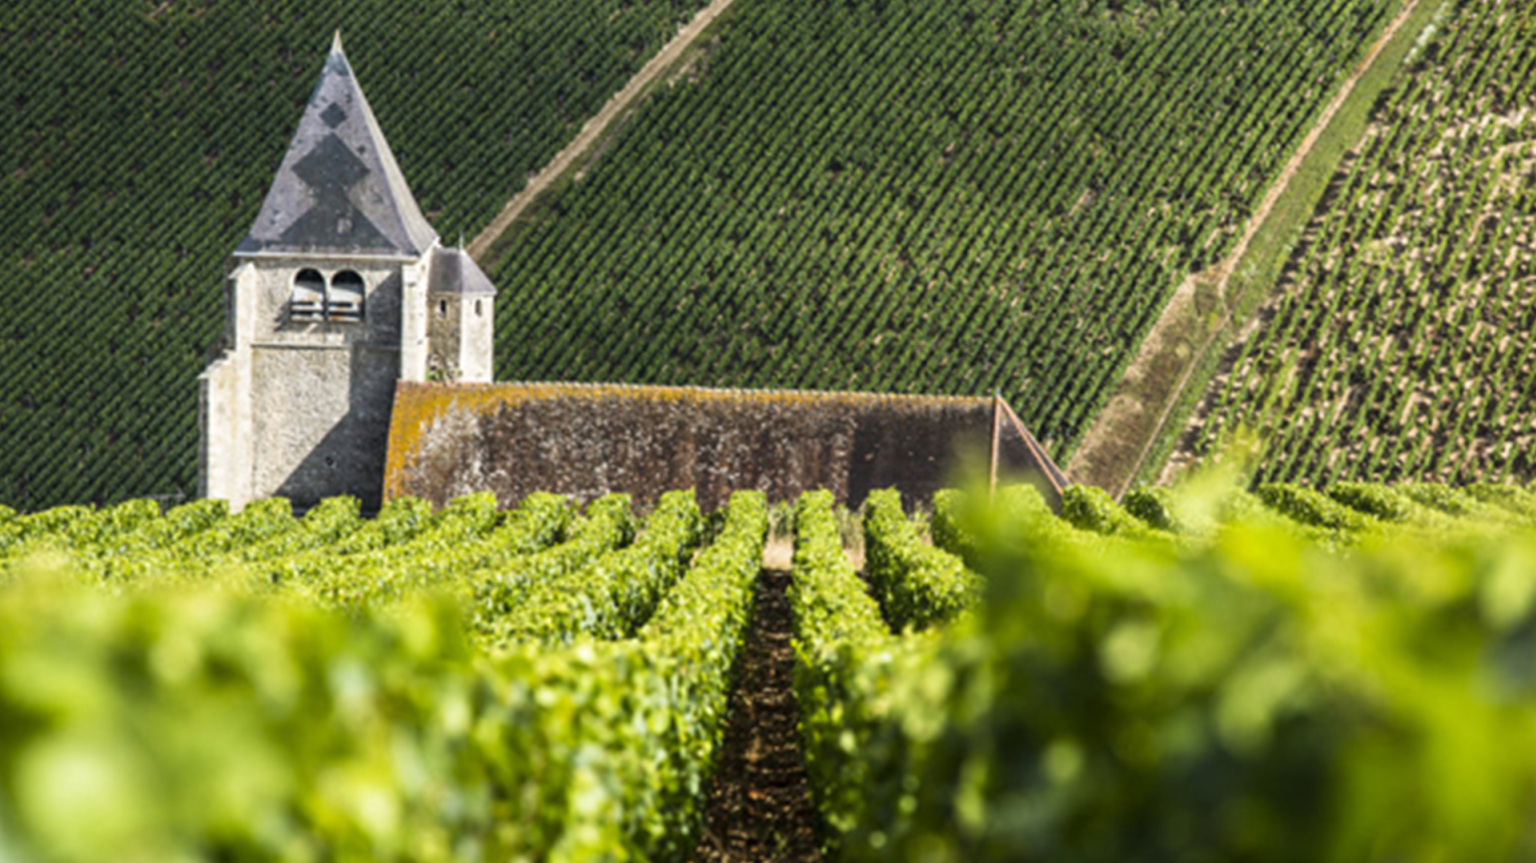 Leading wine critics Report on 2017 White Burgundy